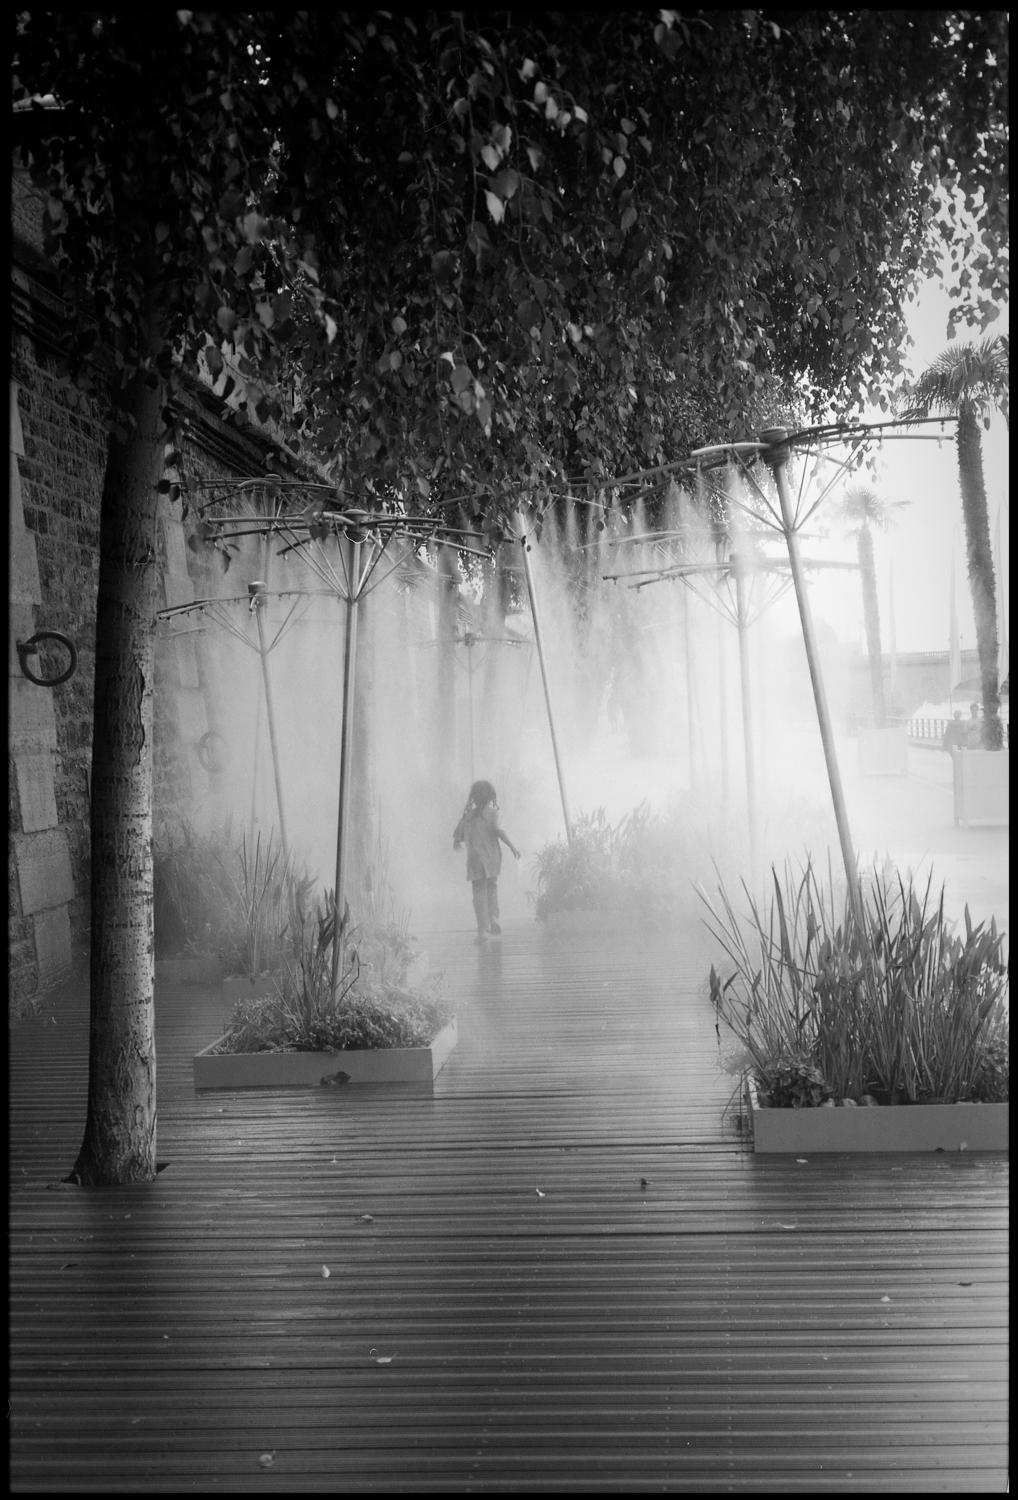 Edition 1/10 - Young Girl Running, Paris, France, Silver Gelatin Photograph